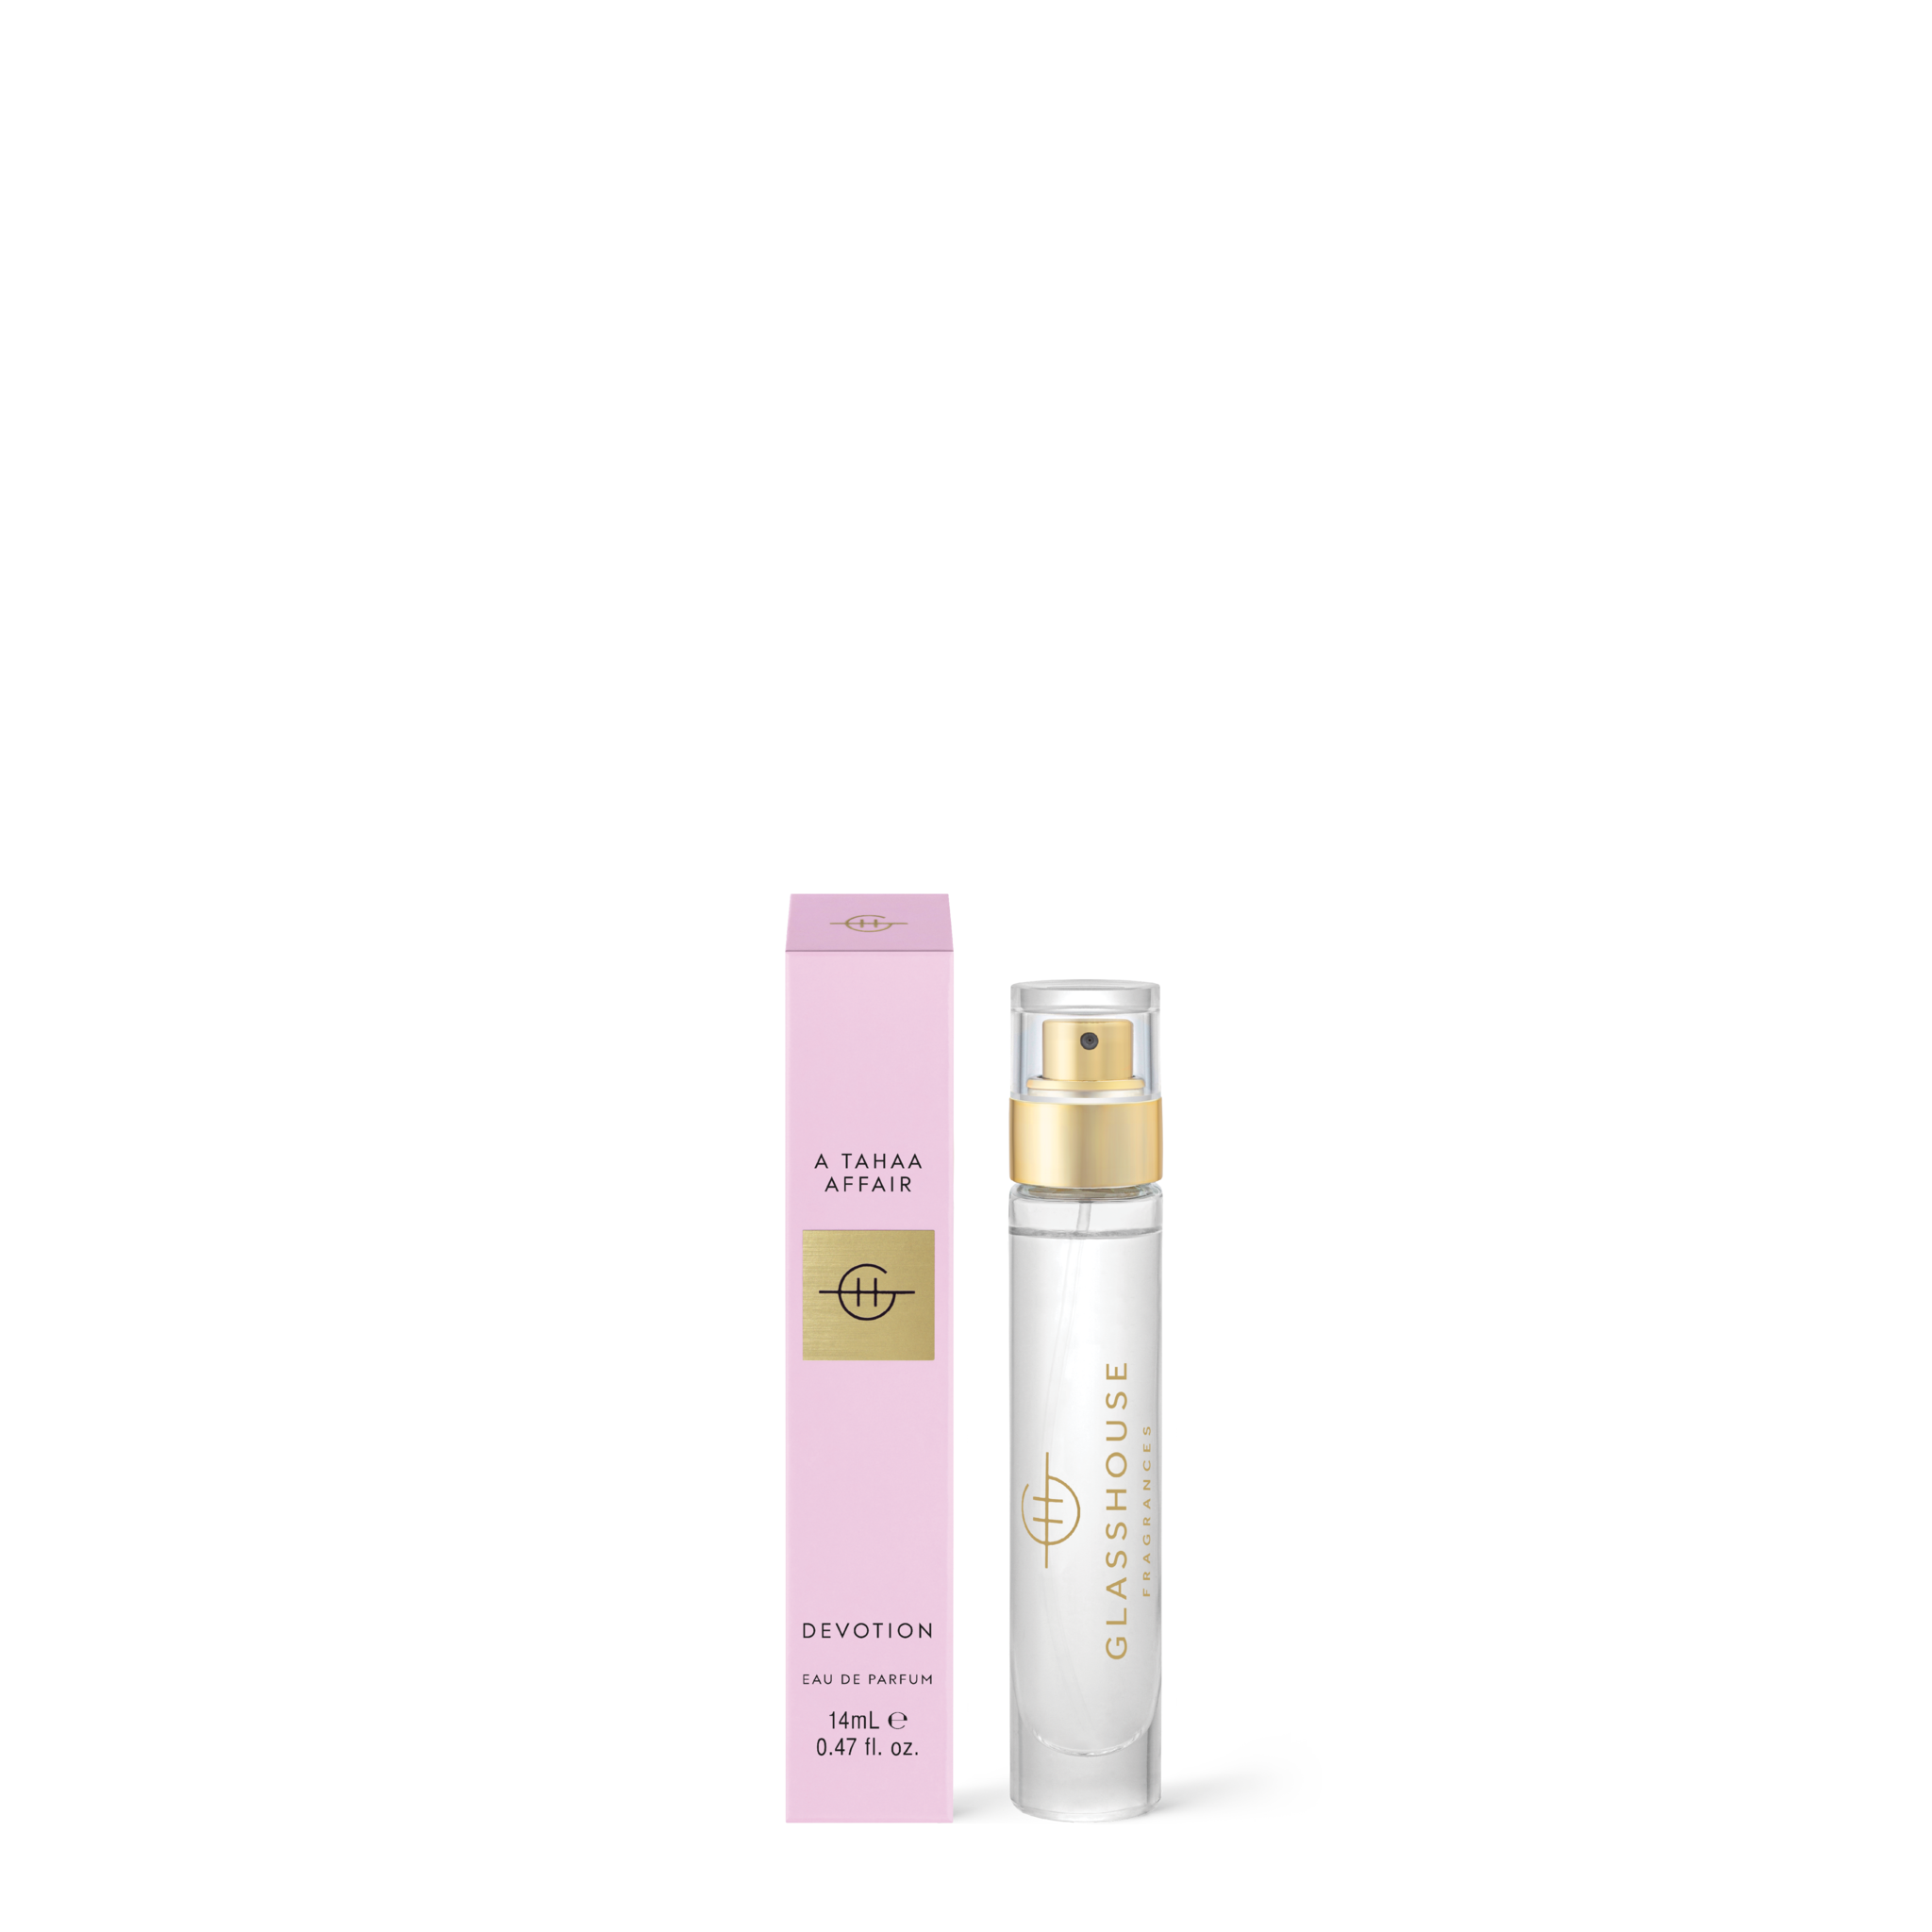 Glasshouse Fragrances 14ml Eau de Parfum - A TAHAA AFFAIR DEVOTION - Butterscotch Caramel & Jasmine